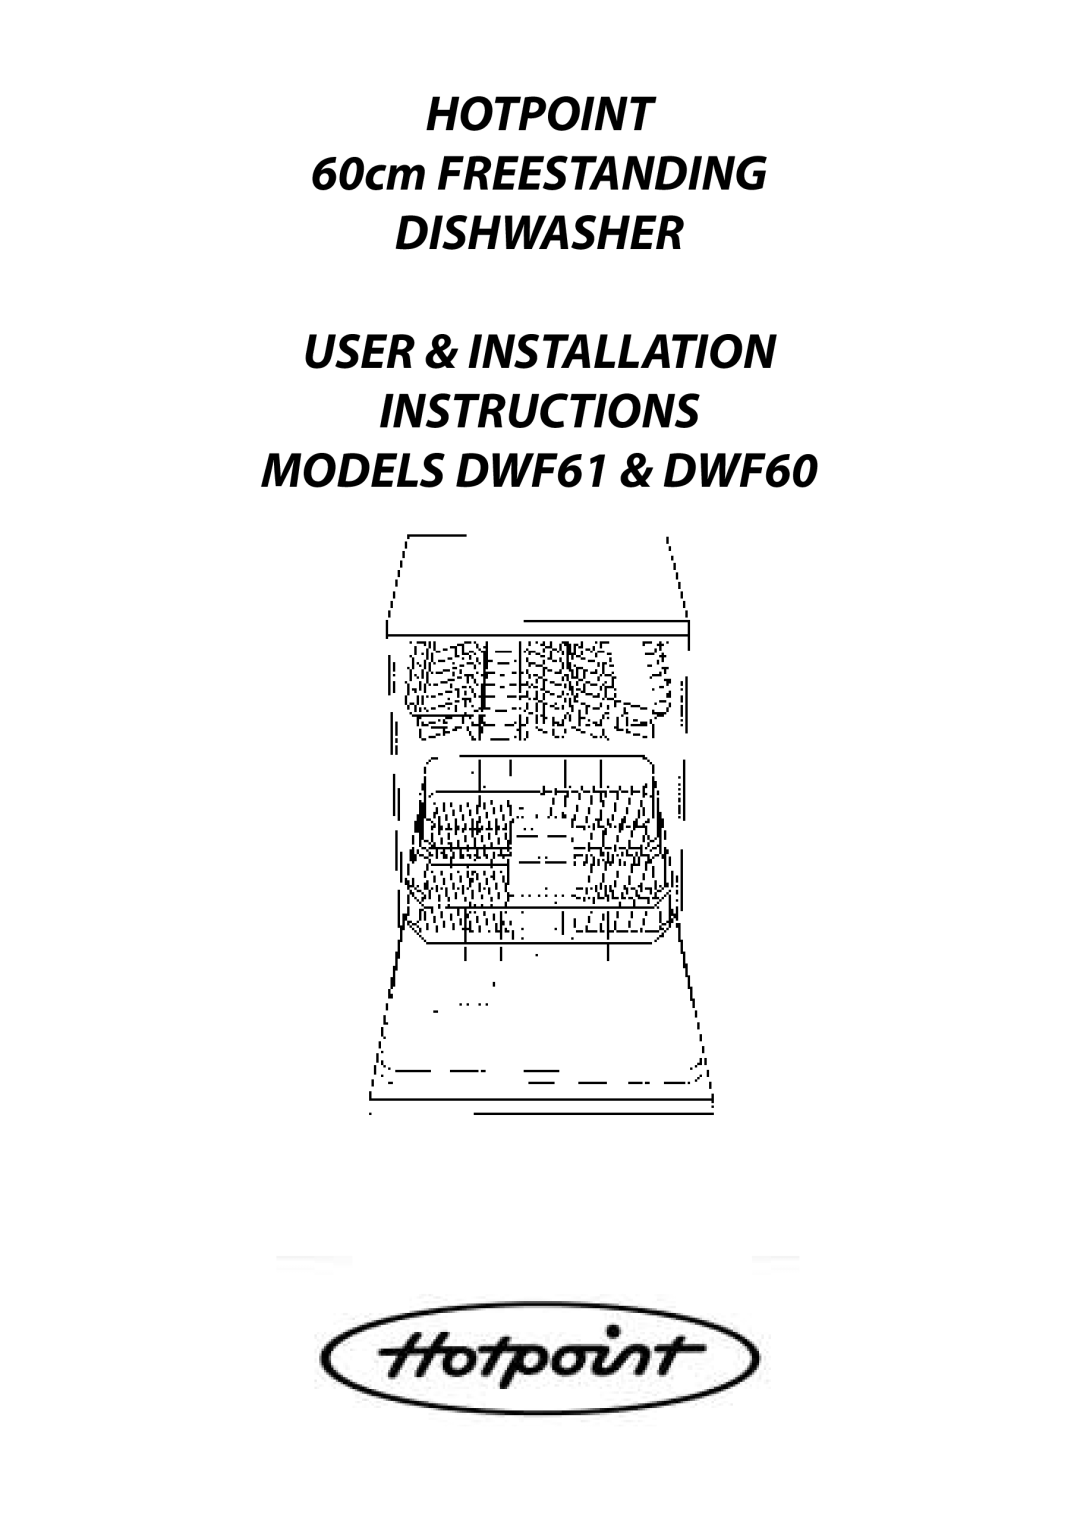 Hotpoint DWF60, DWF61 installation instructions HOTPOINT 60cm FREESTANDING DISHWASHER, User & Installation Instructions 